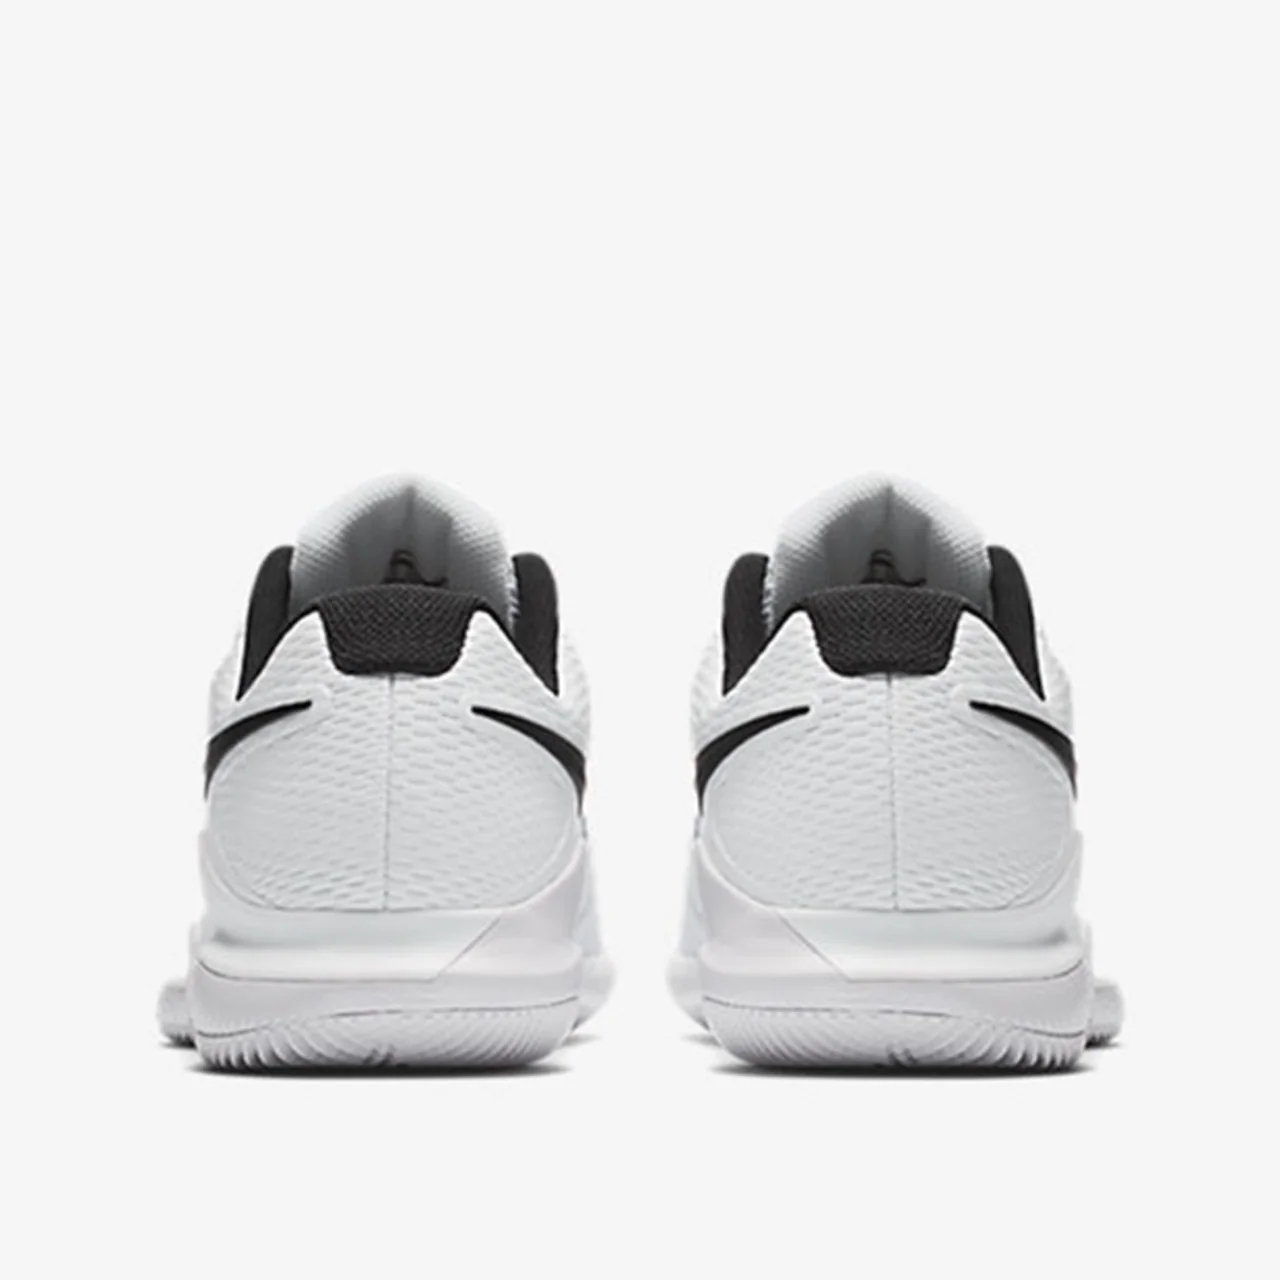 Nike Air Zoom Vapor X White/Black 2018